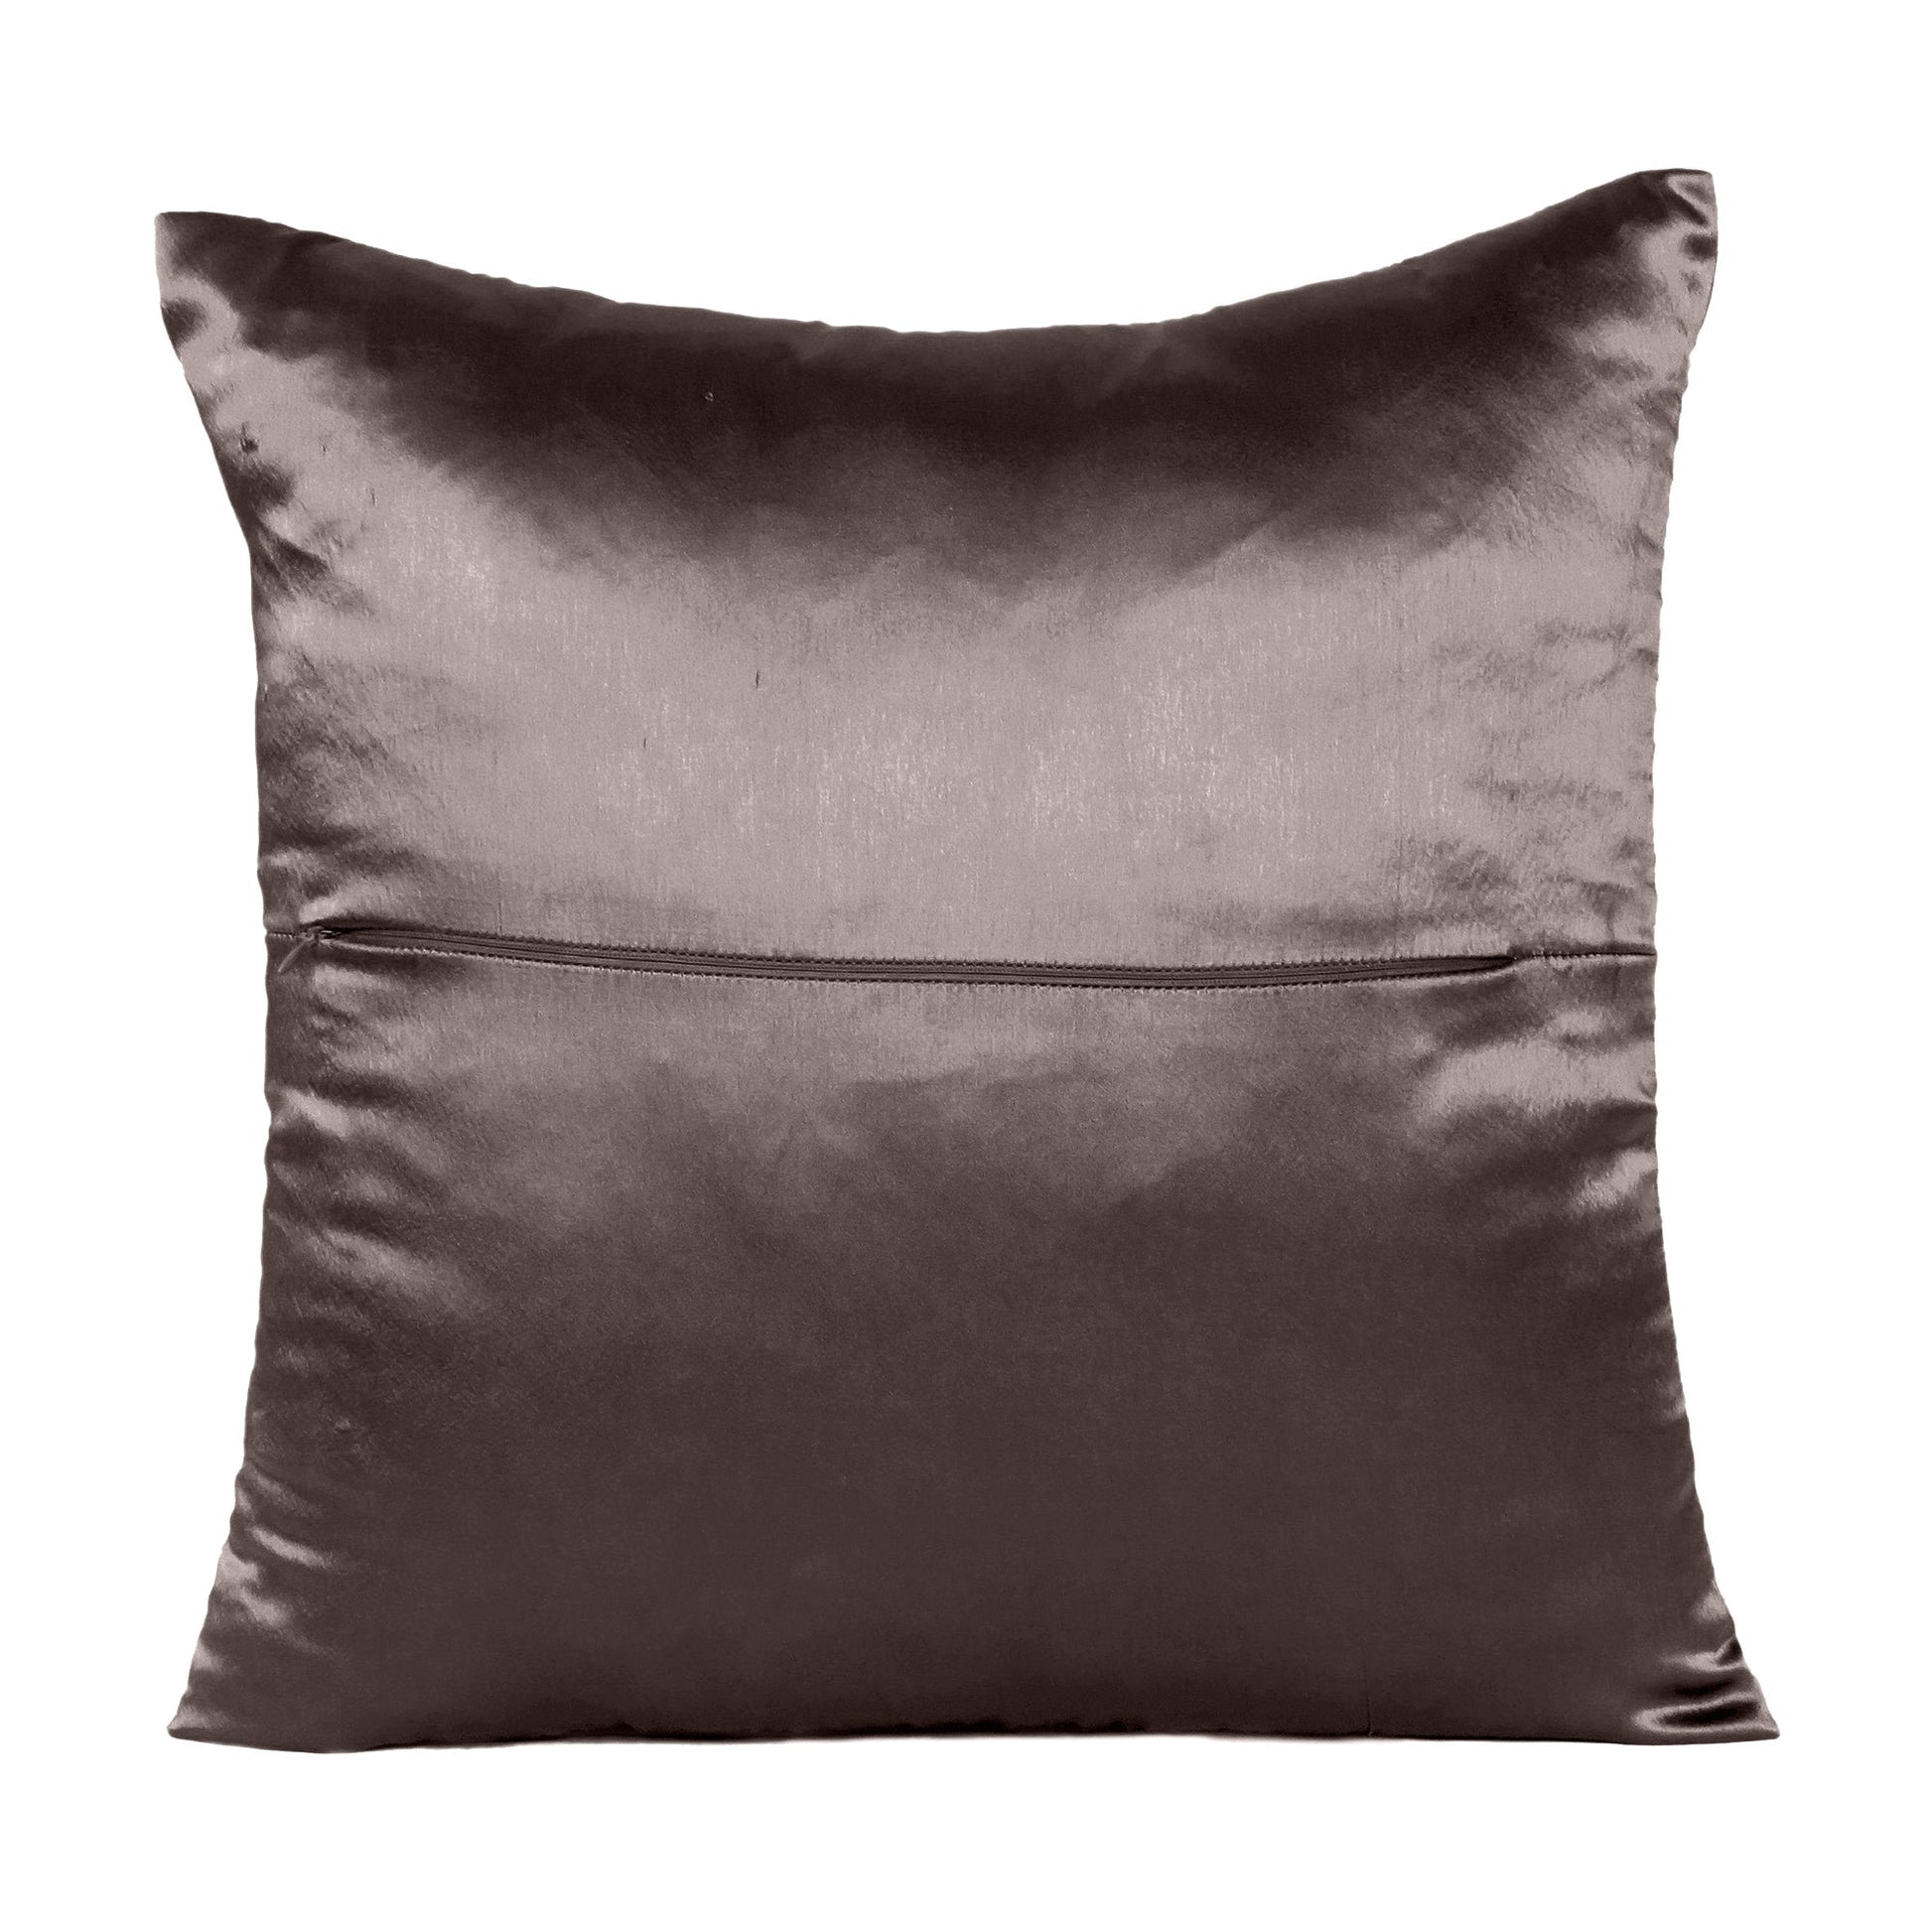 Luxury Soft Plain Satin Silk Cushion Cover in Set of 2 - Brunette Brown